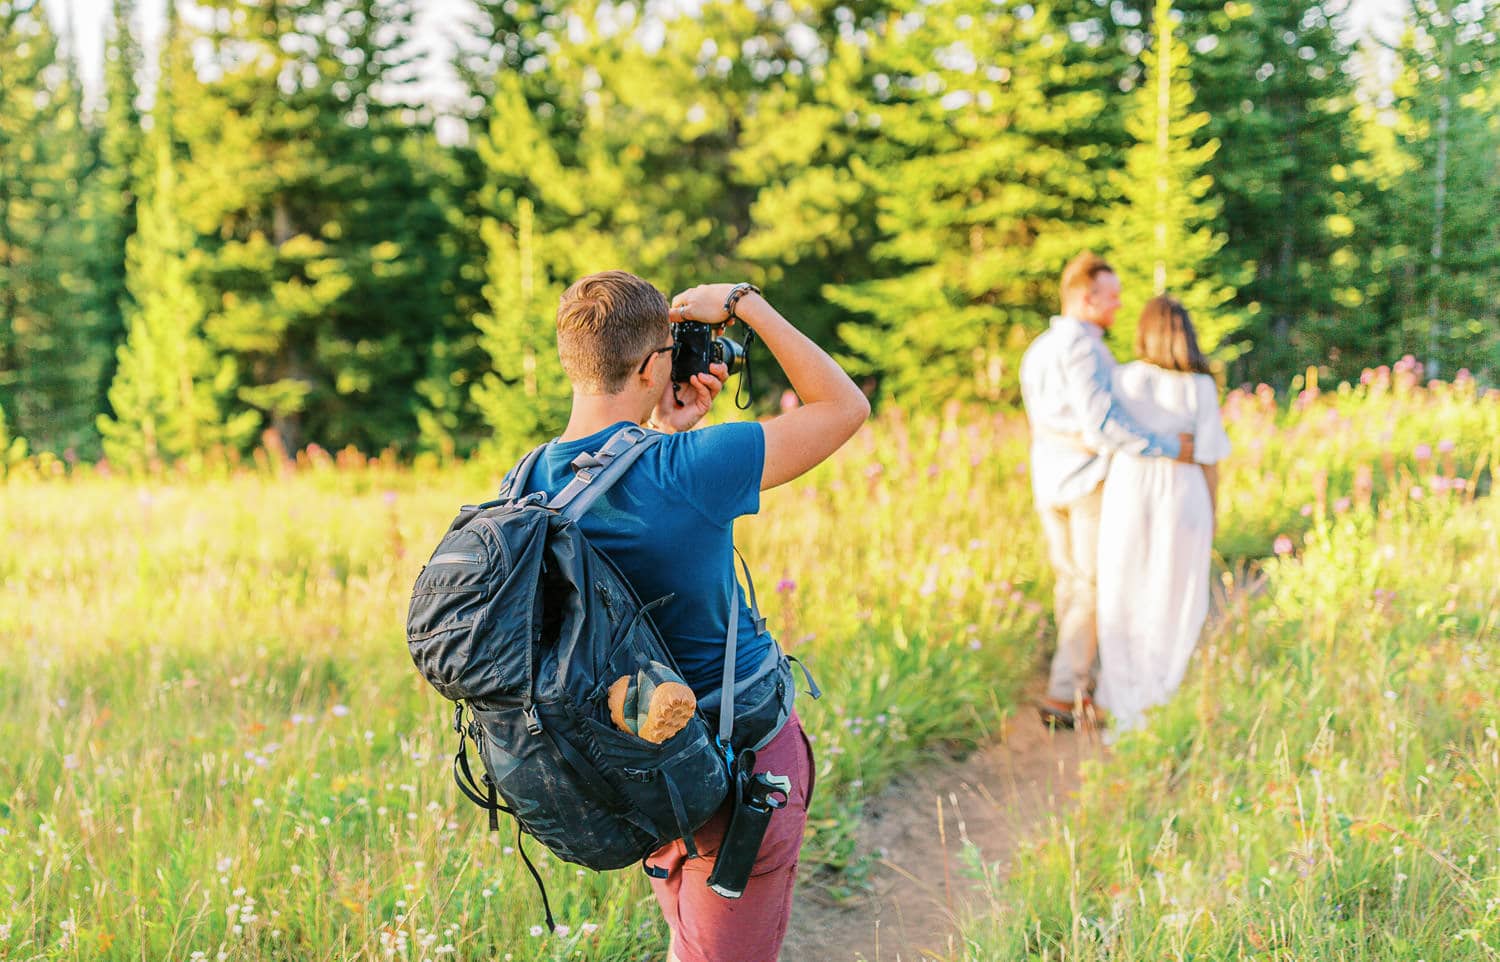 Should you hire a specialized adventure elopement photographer?